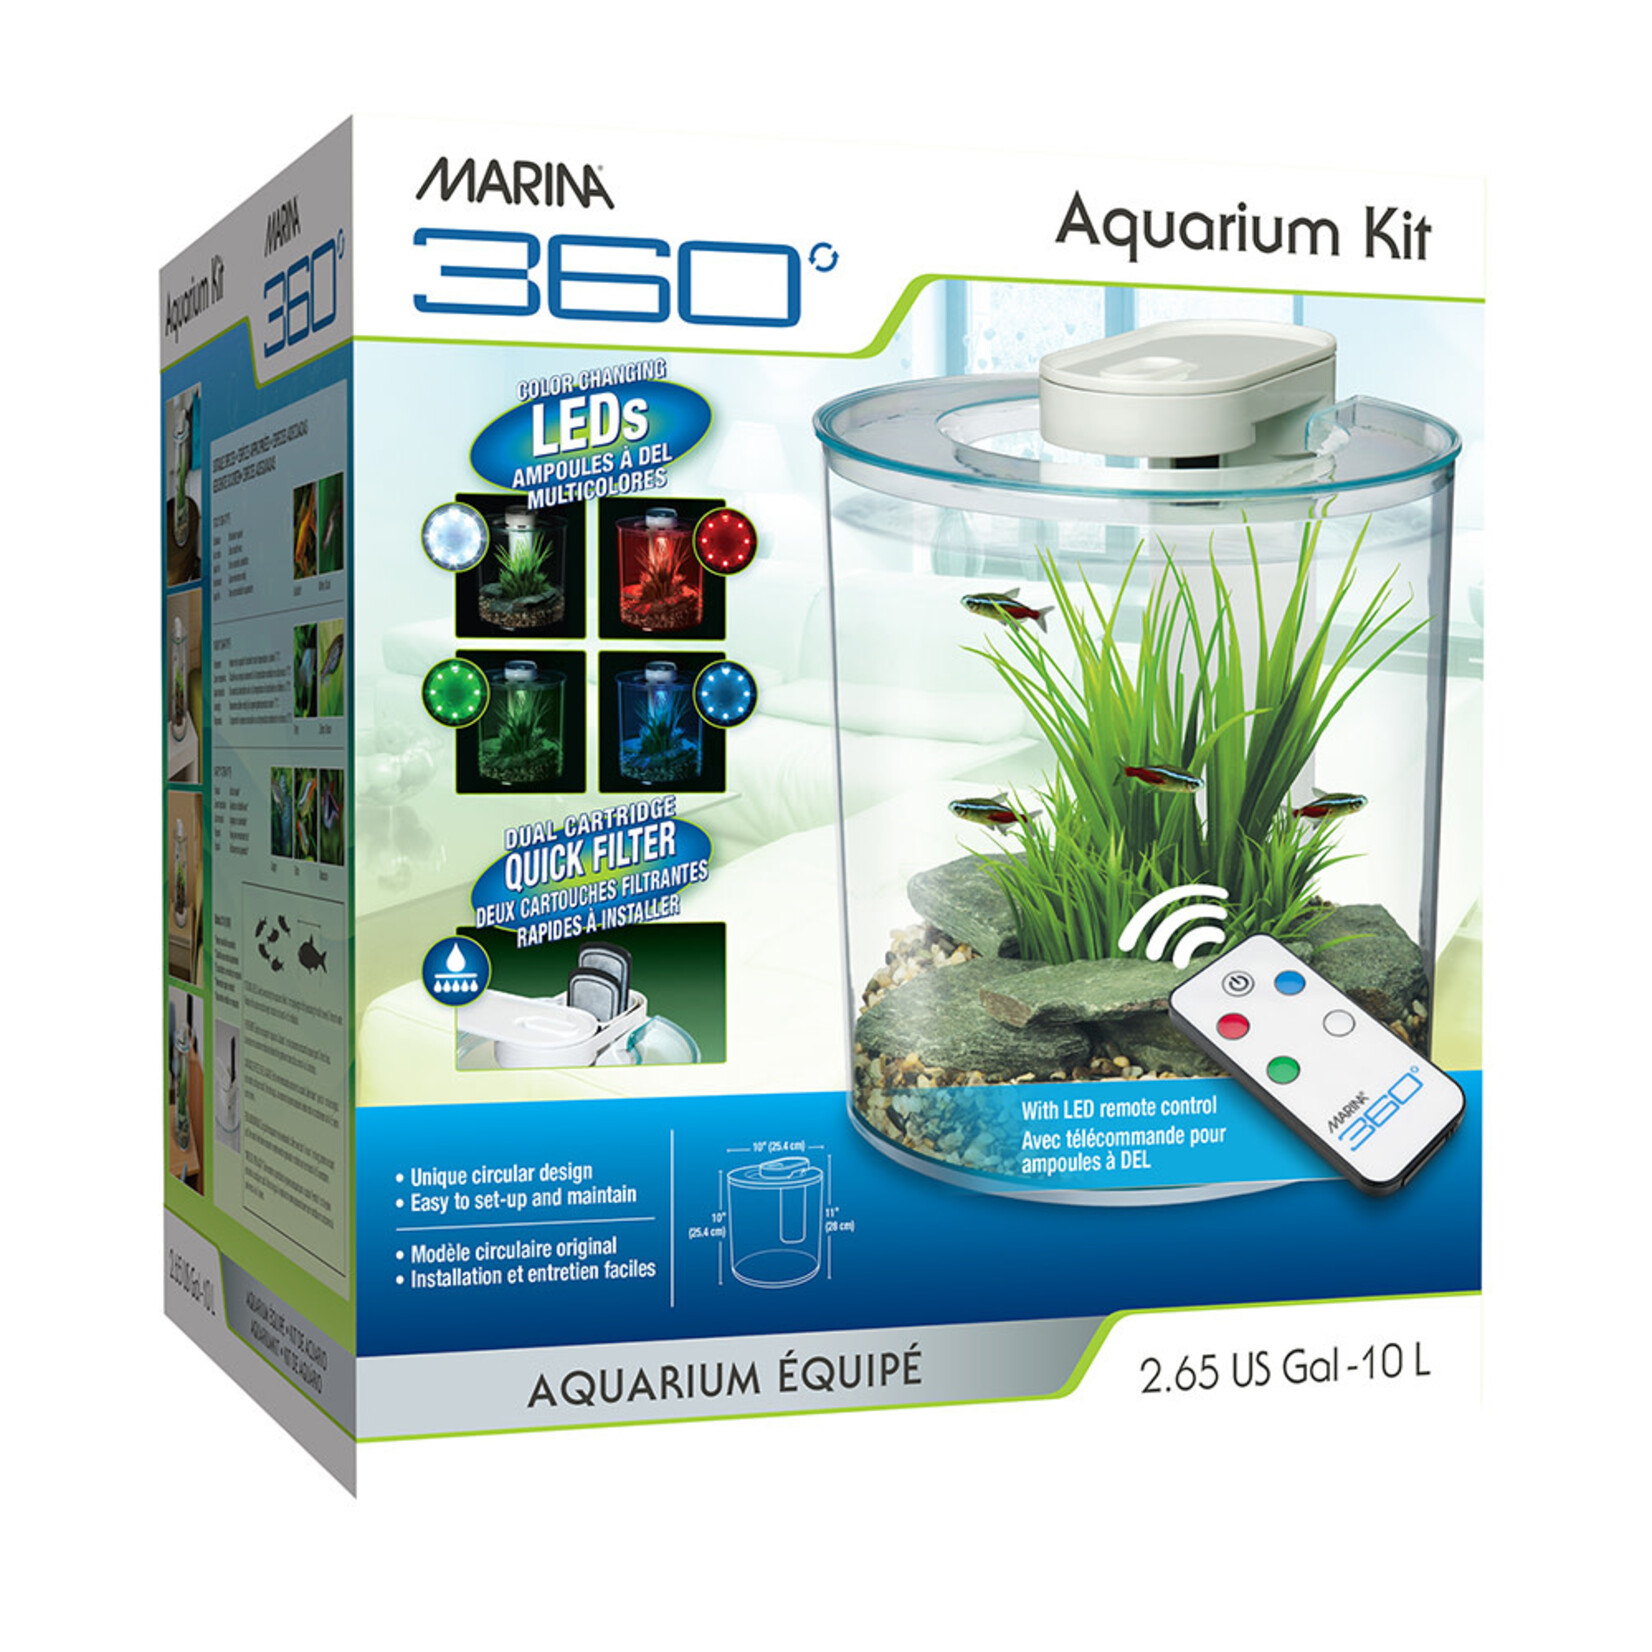 MARINA Marina 360 Aquarium Kit - 10 L (2.65 US gal)